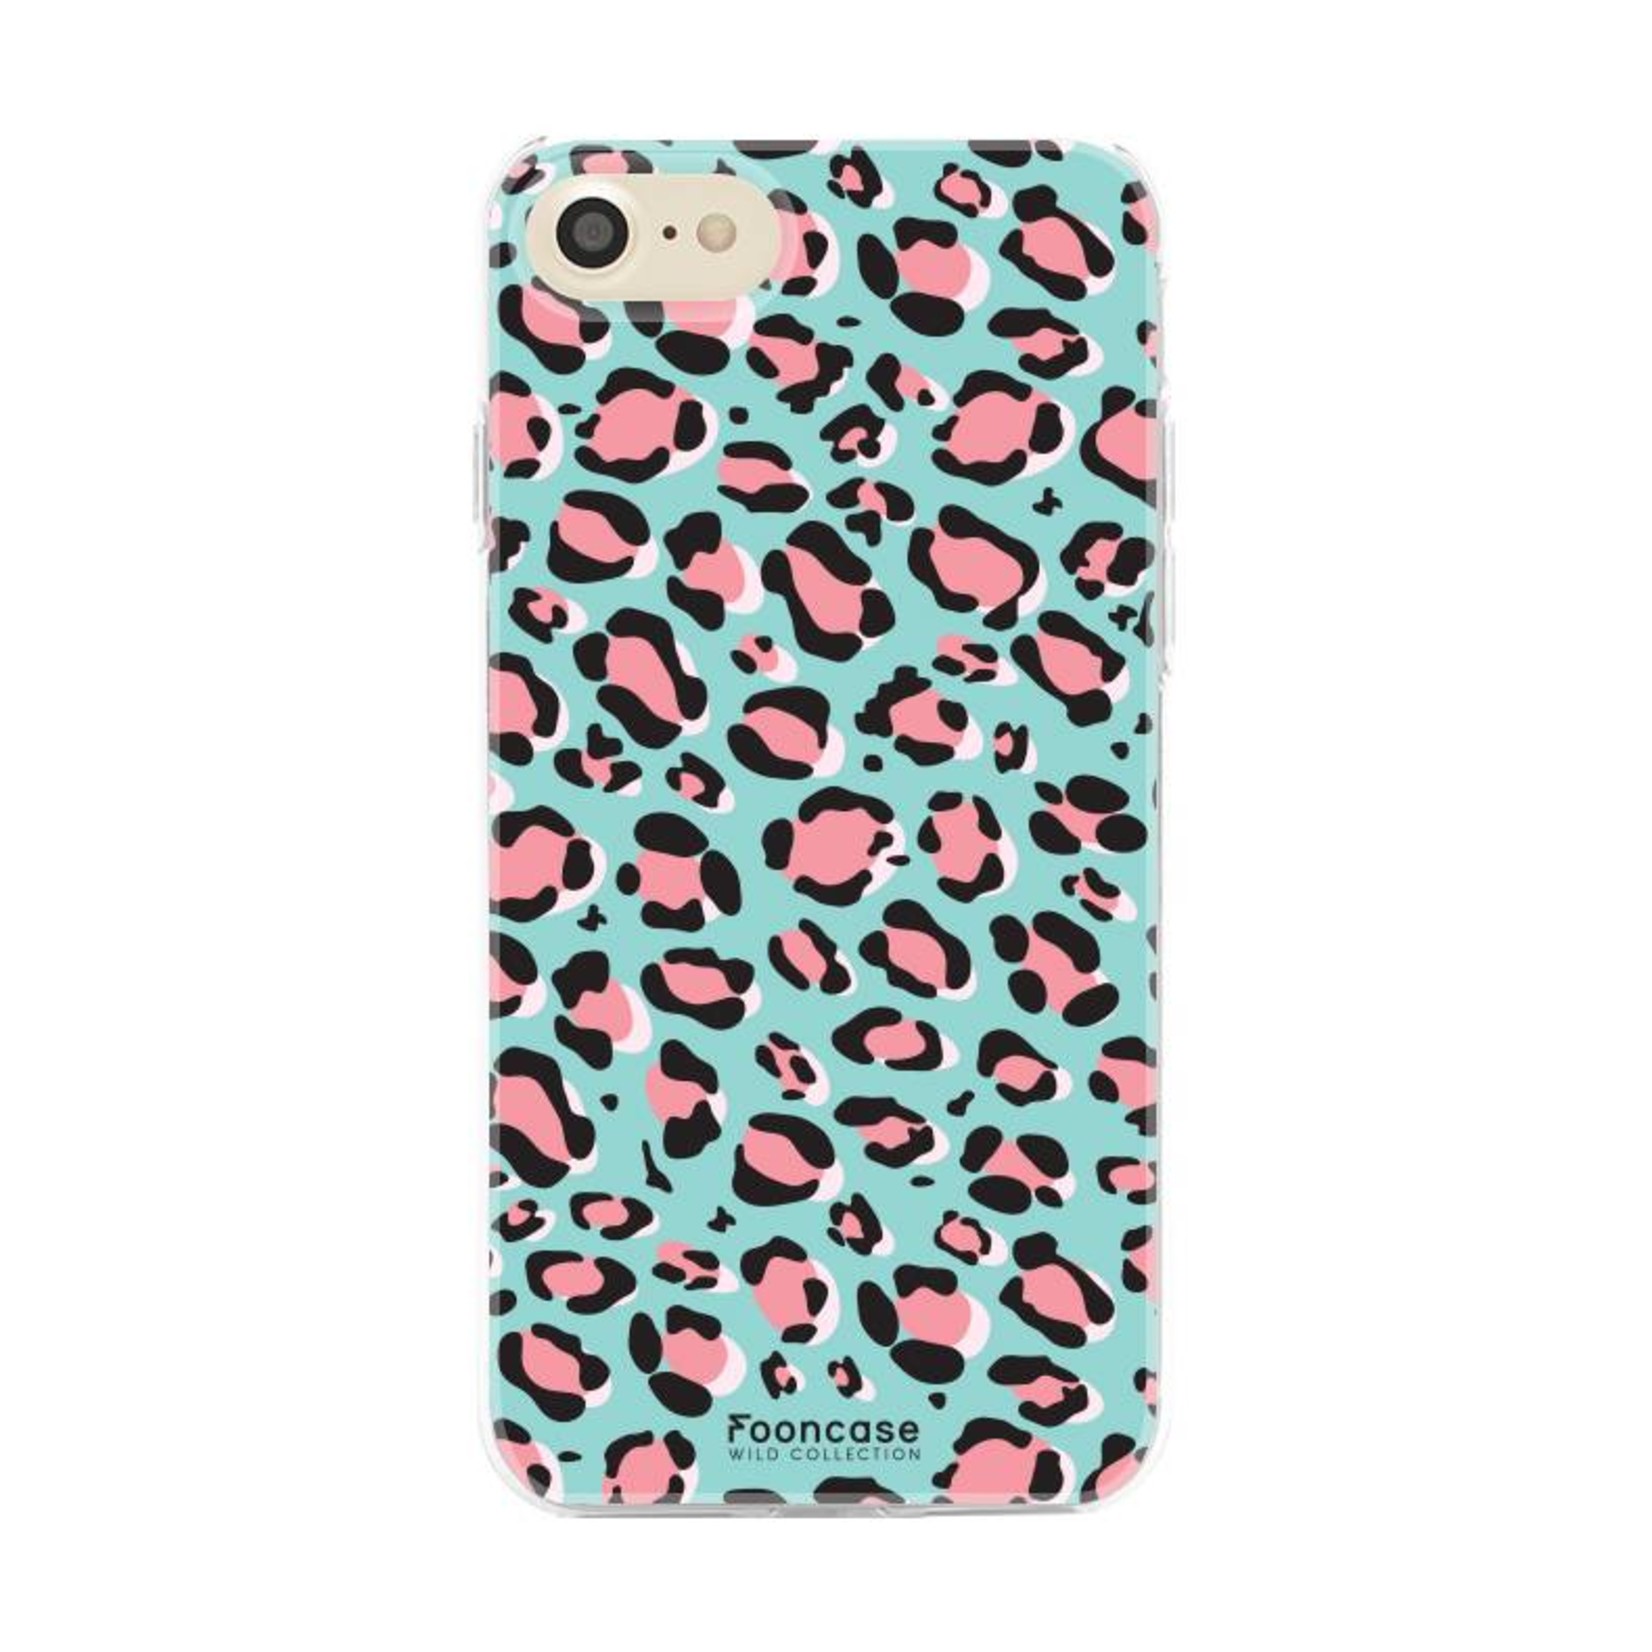 FOONCASE iPhone 8 hoesje TPU Soft Case - Back Cover - Luipaard / Leopard print / Blauw